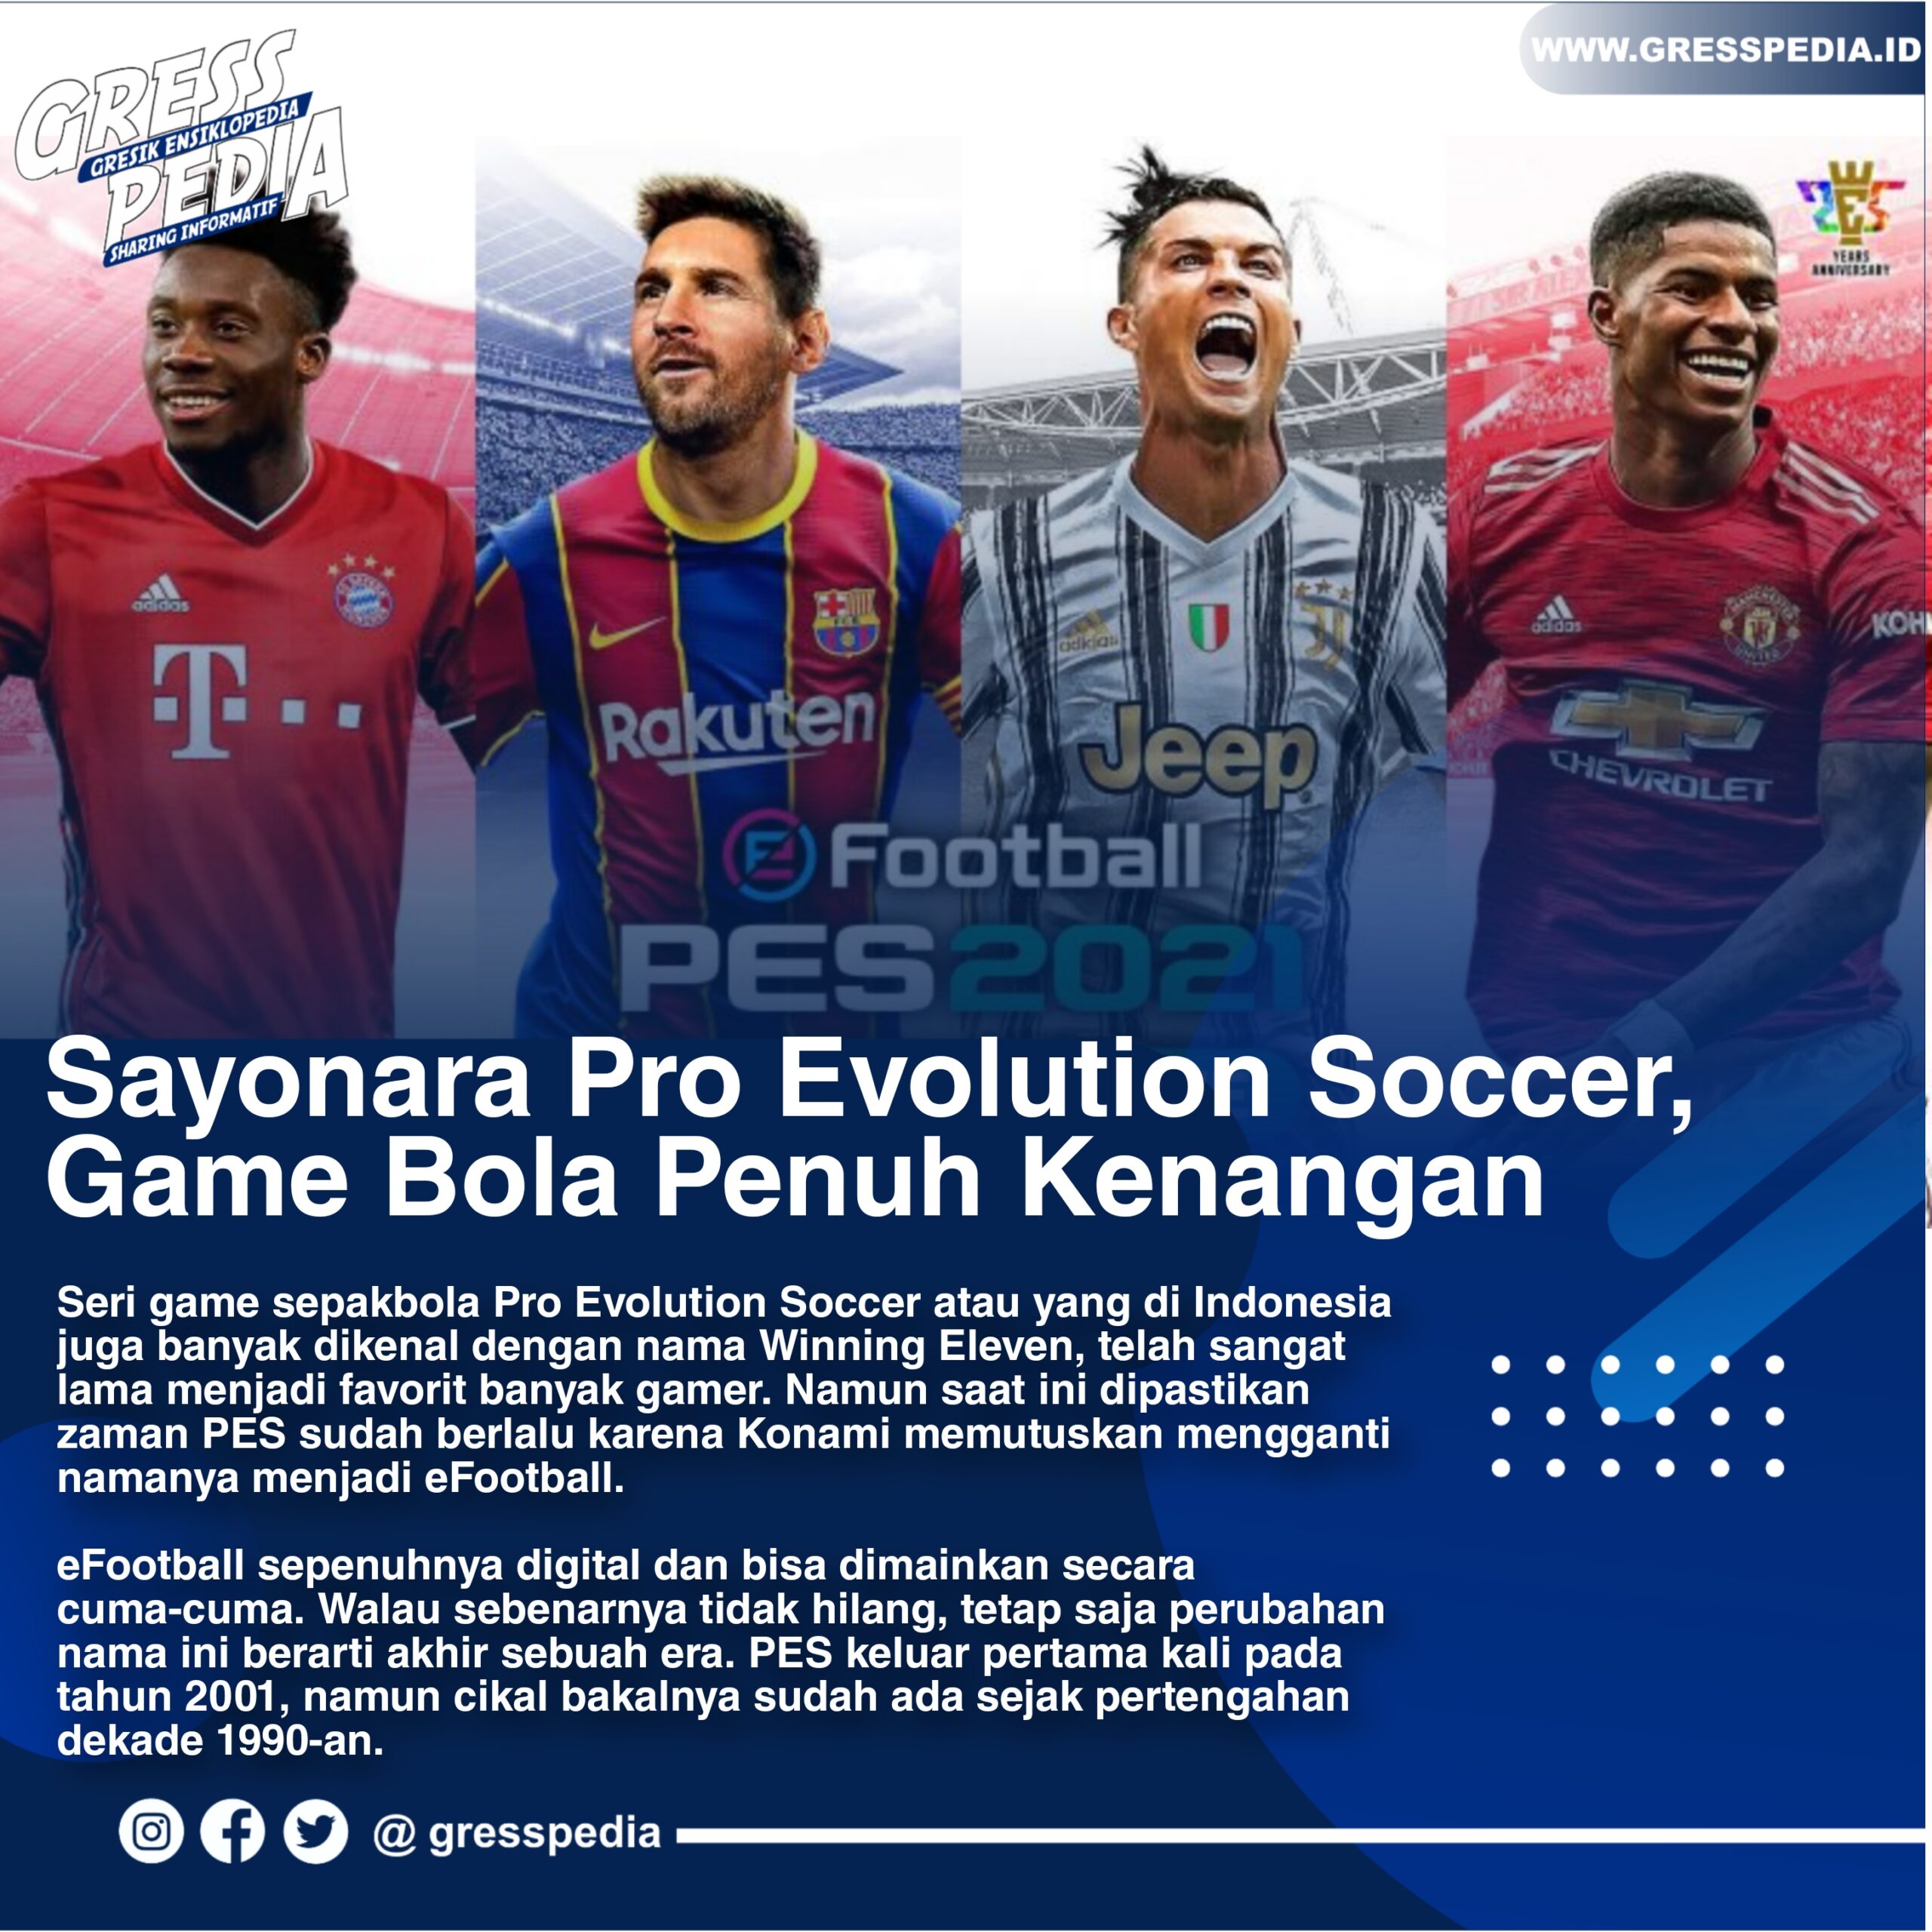 Sayonara Pro Evolution Soccer, Game Bola Penuh Kenangan